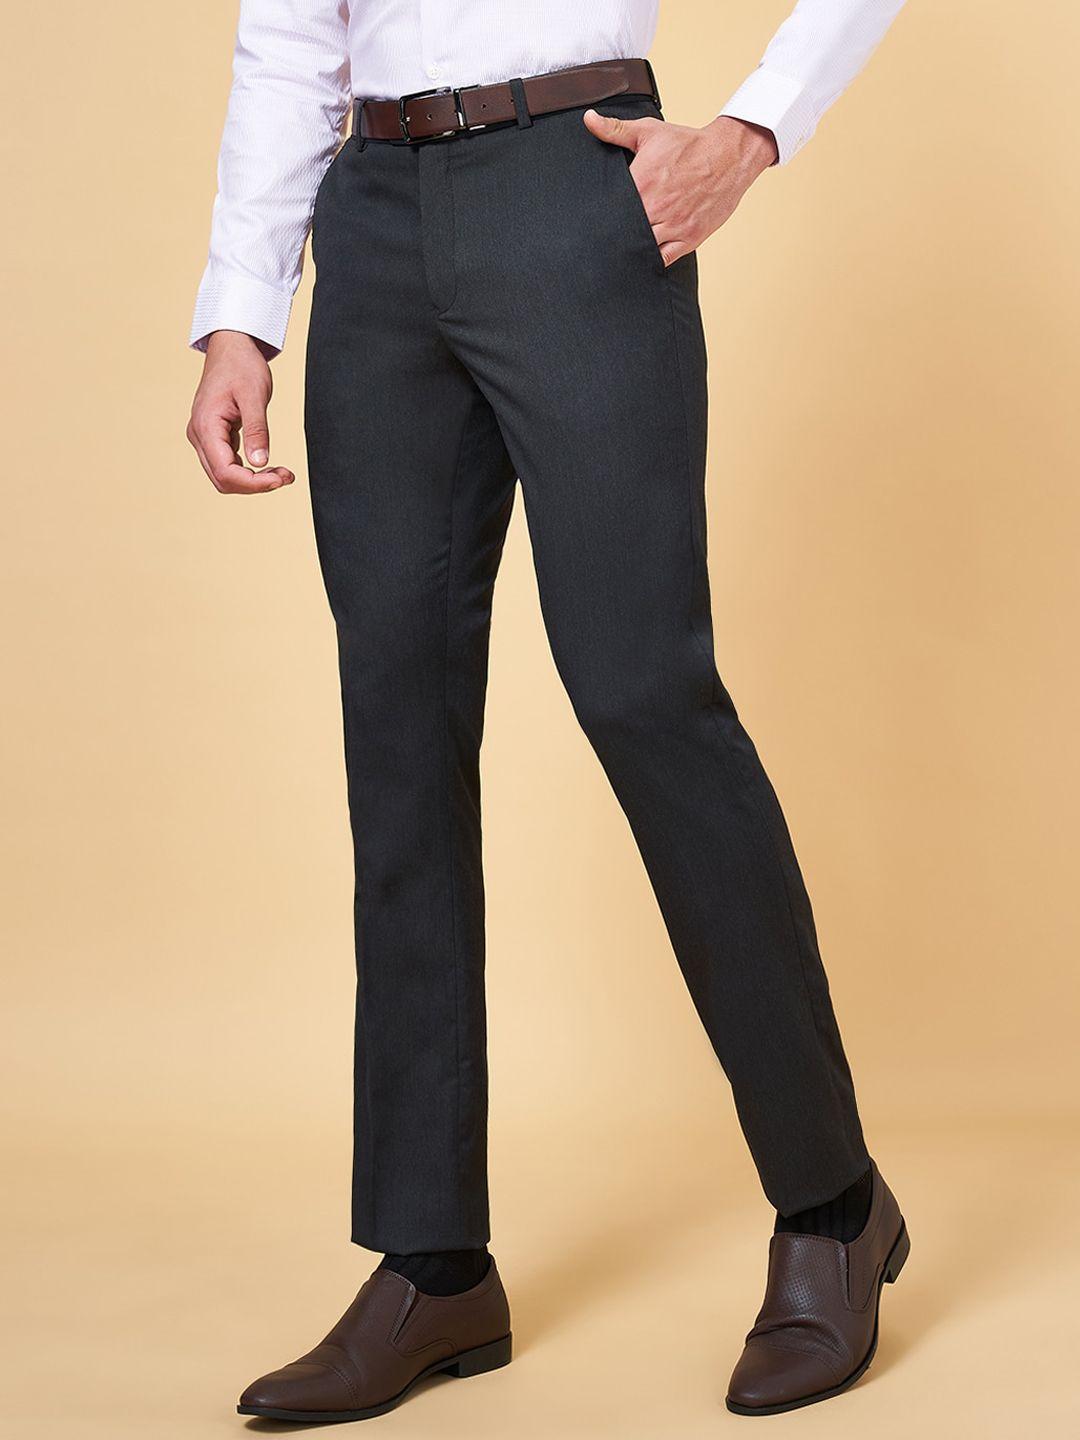 peregrine-by-pantaloons-men-slim-fit-low-rise-formal-trousers